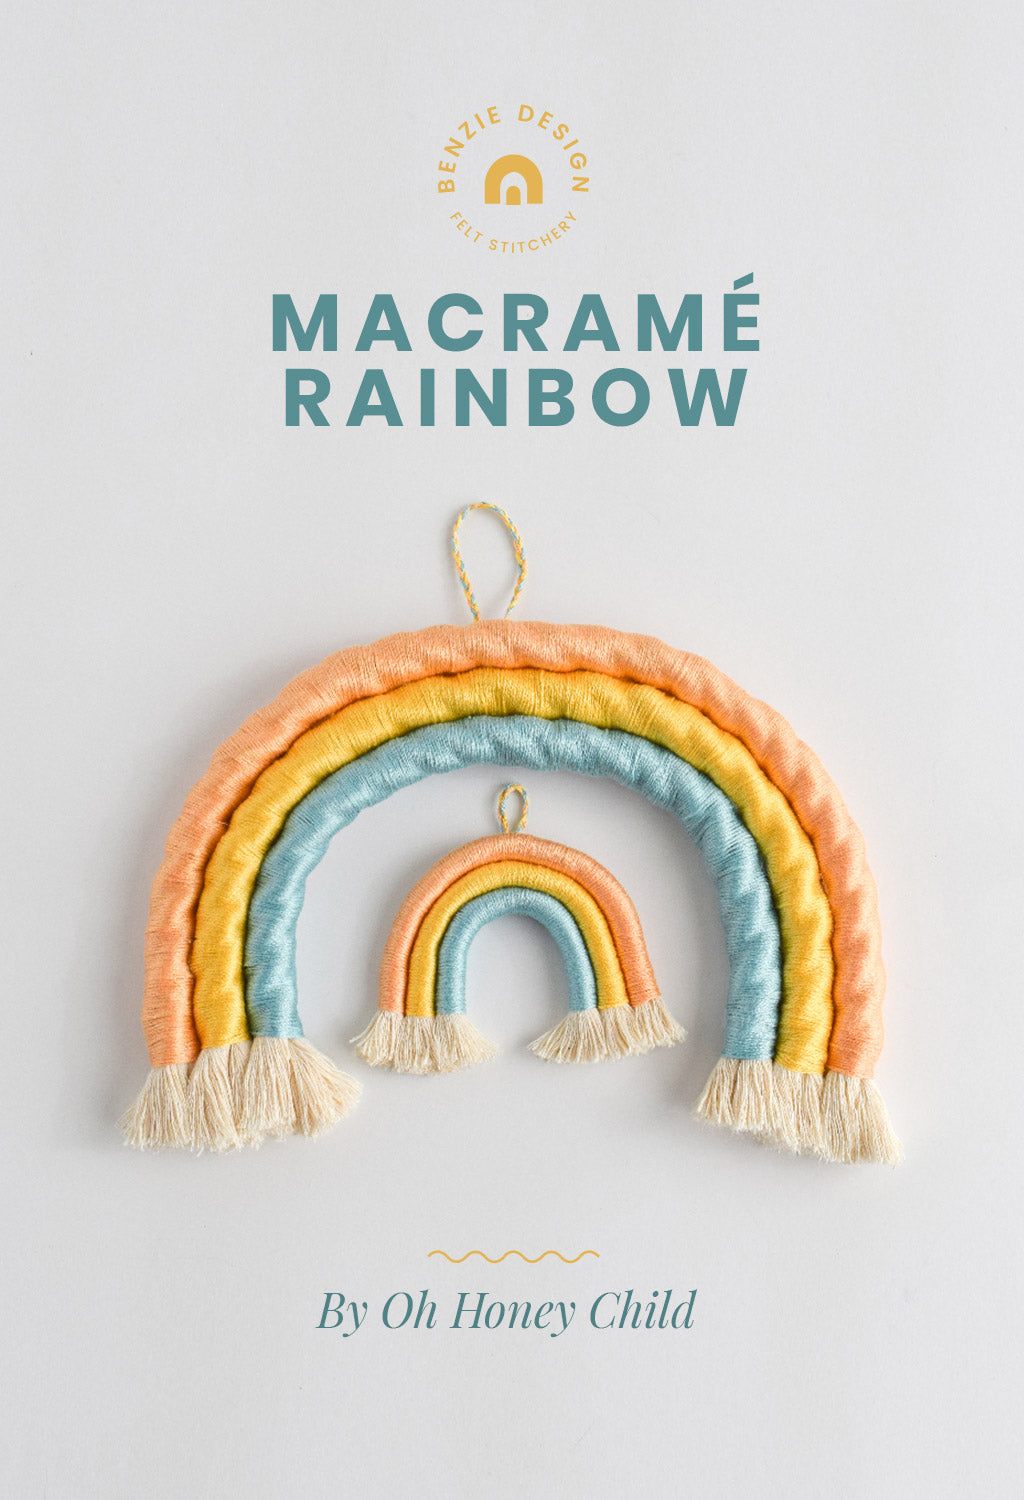 Rainbow Macrame Craft